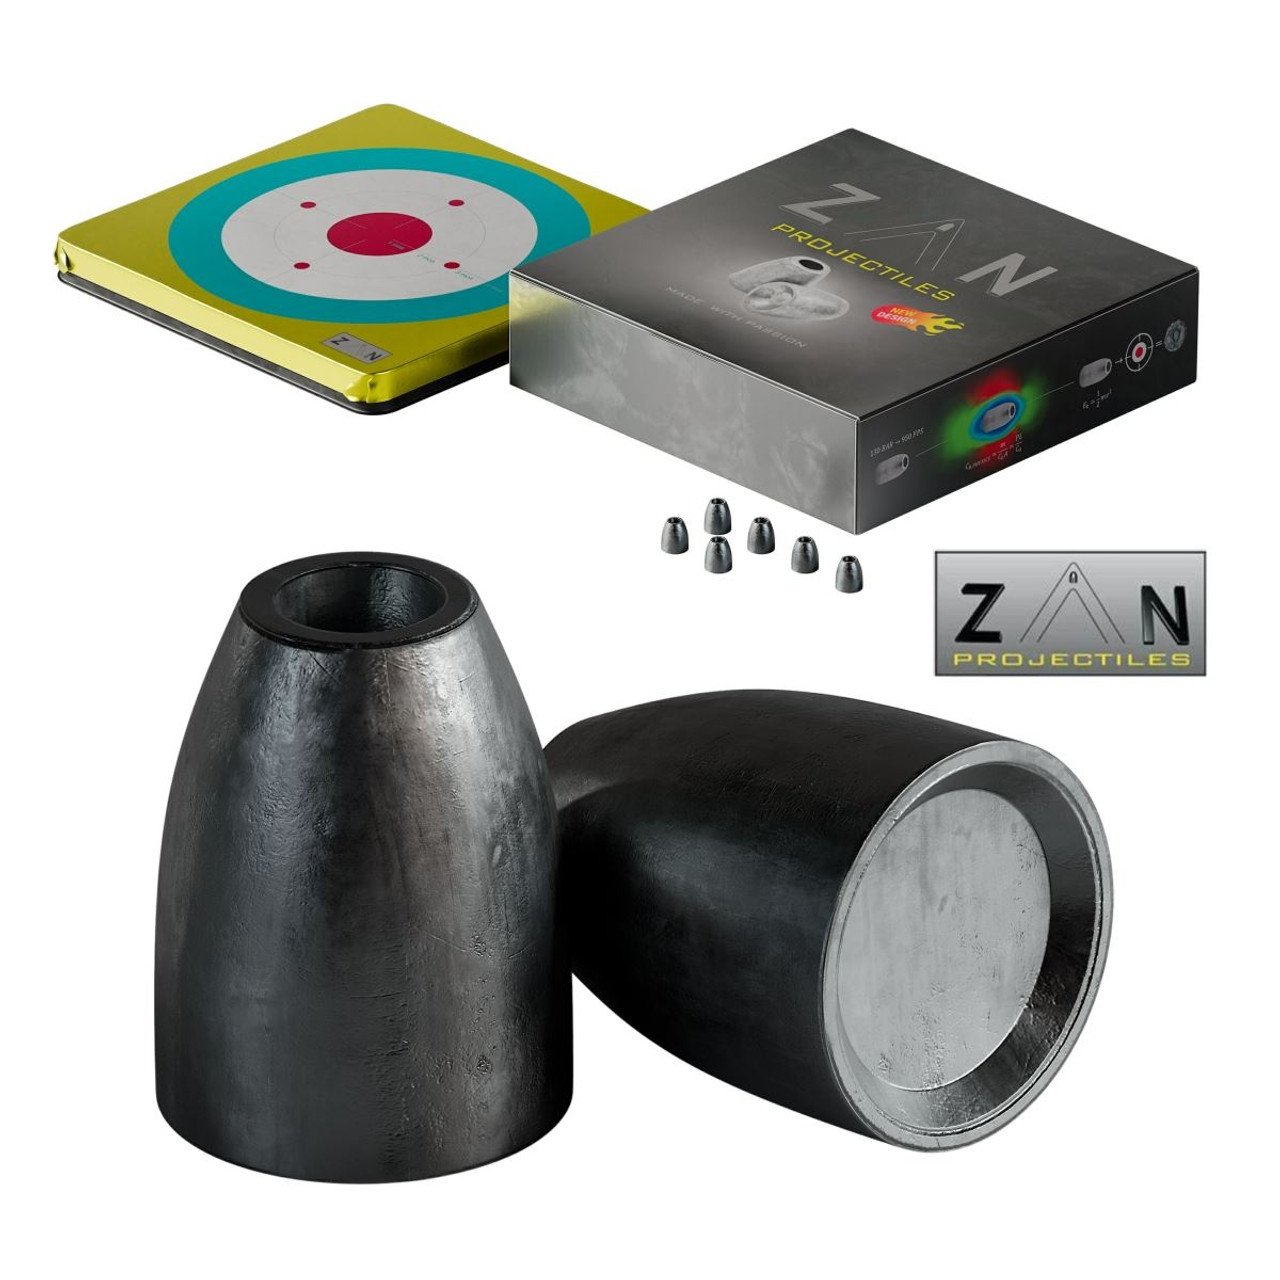 ZAN Projectiles Slugs .22 36gr .217 HP Hollow Point Pellets for Air Rifles